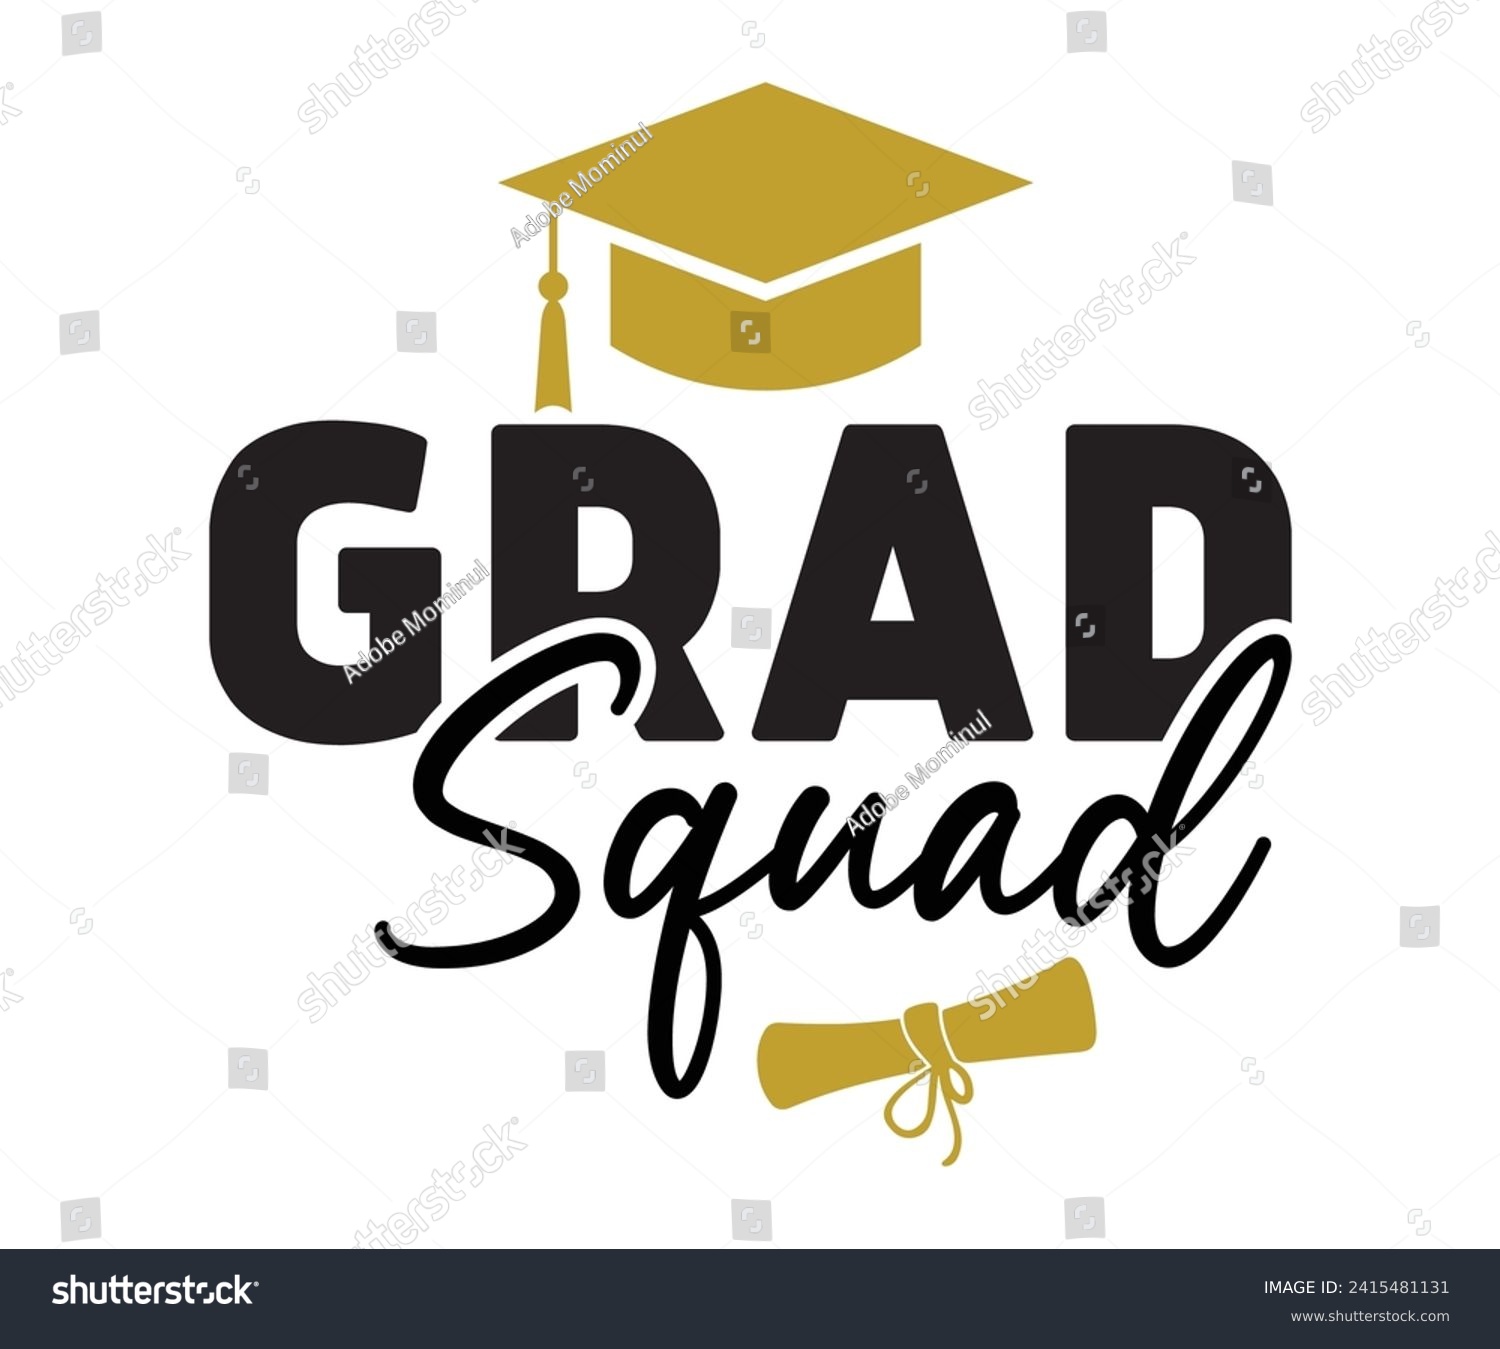 SVG of Grad Squad Svg,Graduation Svg,Senior Svg,Graduate T shirt,Graduation cap,Graduation 2024 Shirt,Family Graduation Svg,Pre-K Grad Shirt,Graduation Qoutes,Graduation Gift Shirt,Cut File,Groovy, svg